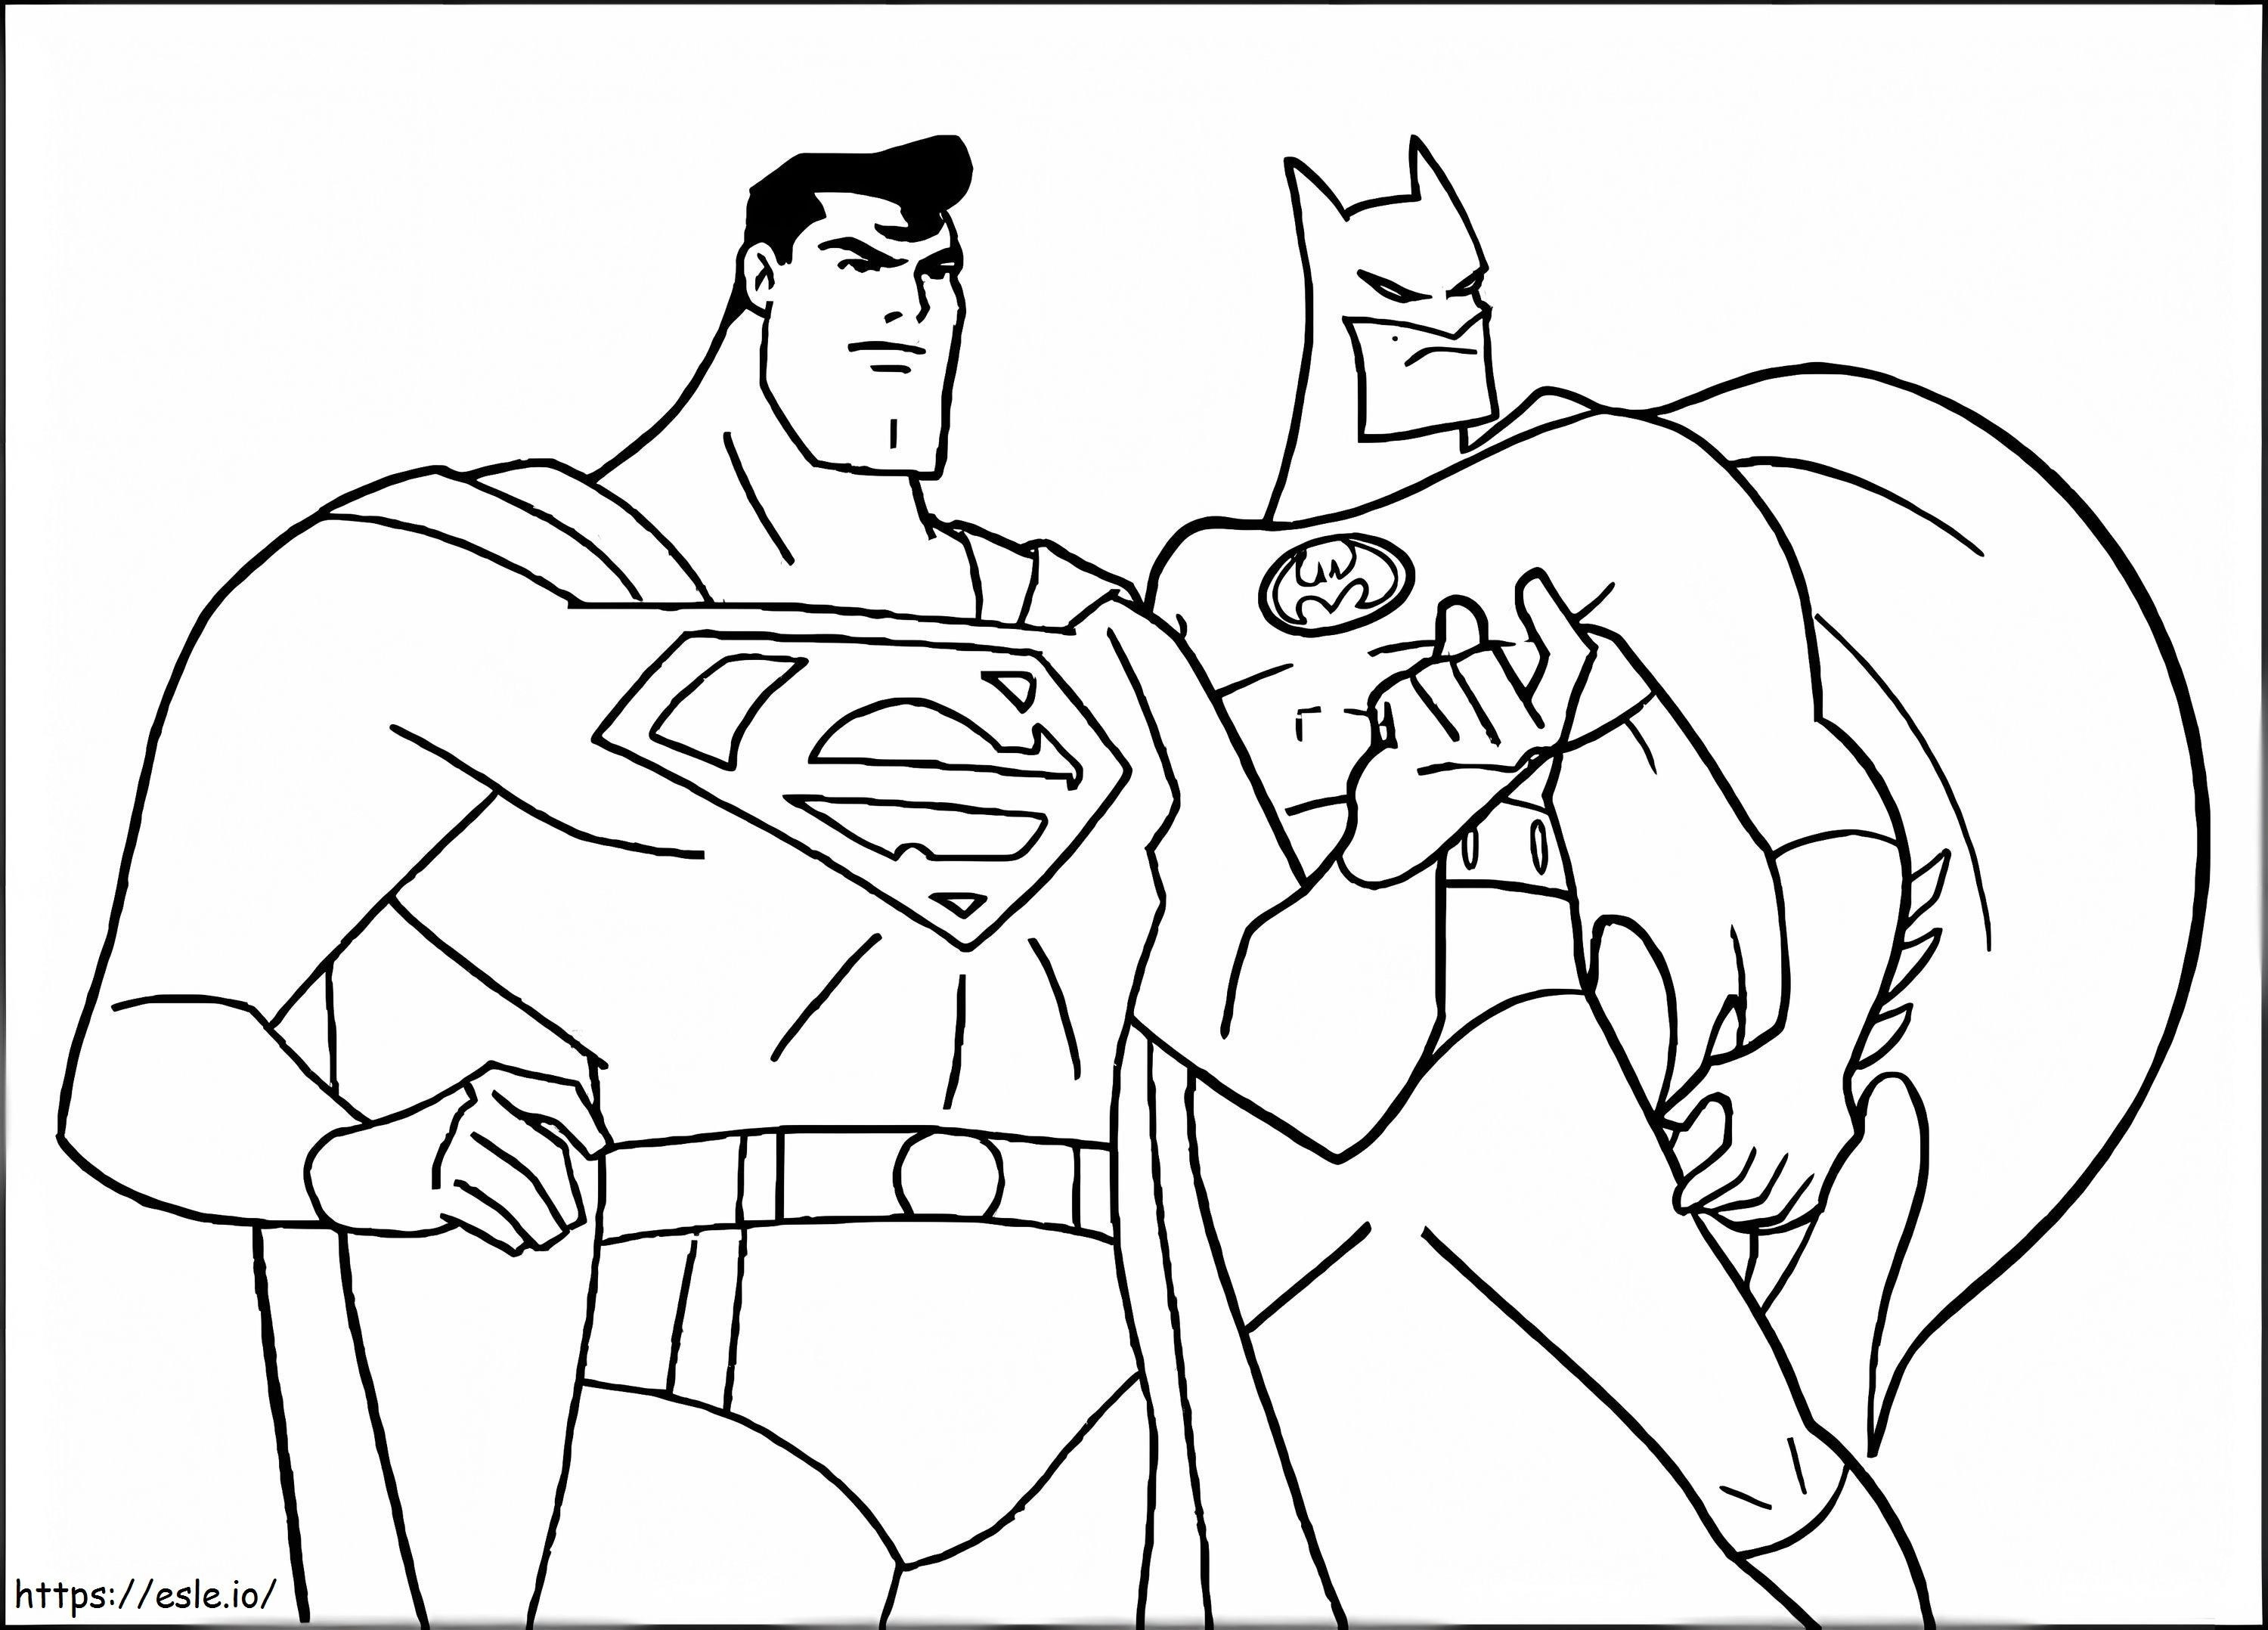 Grande Superman e Batman para colorir